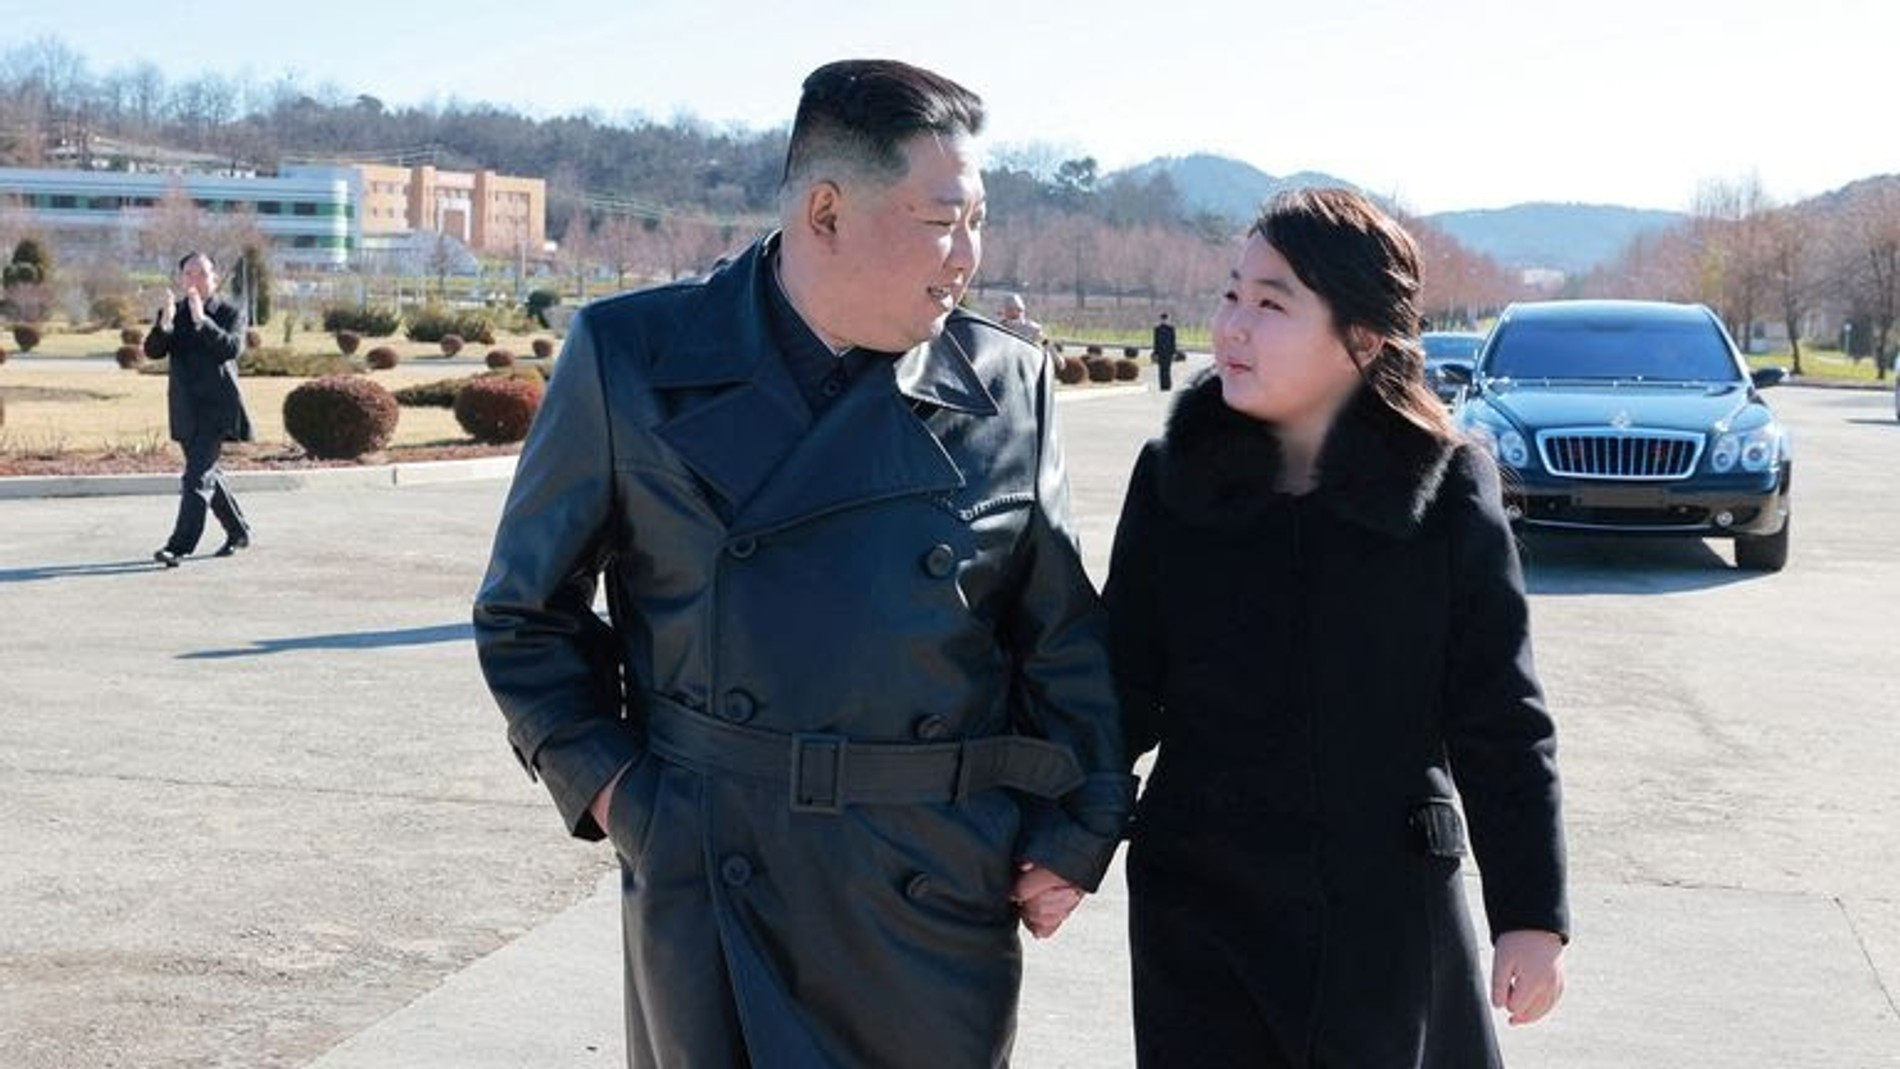 жена президента северной кореи